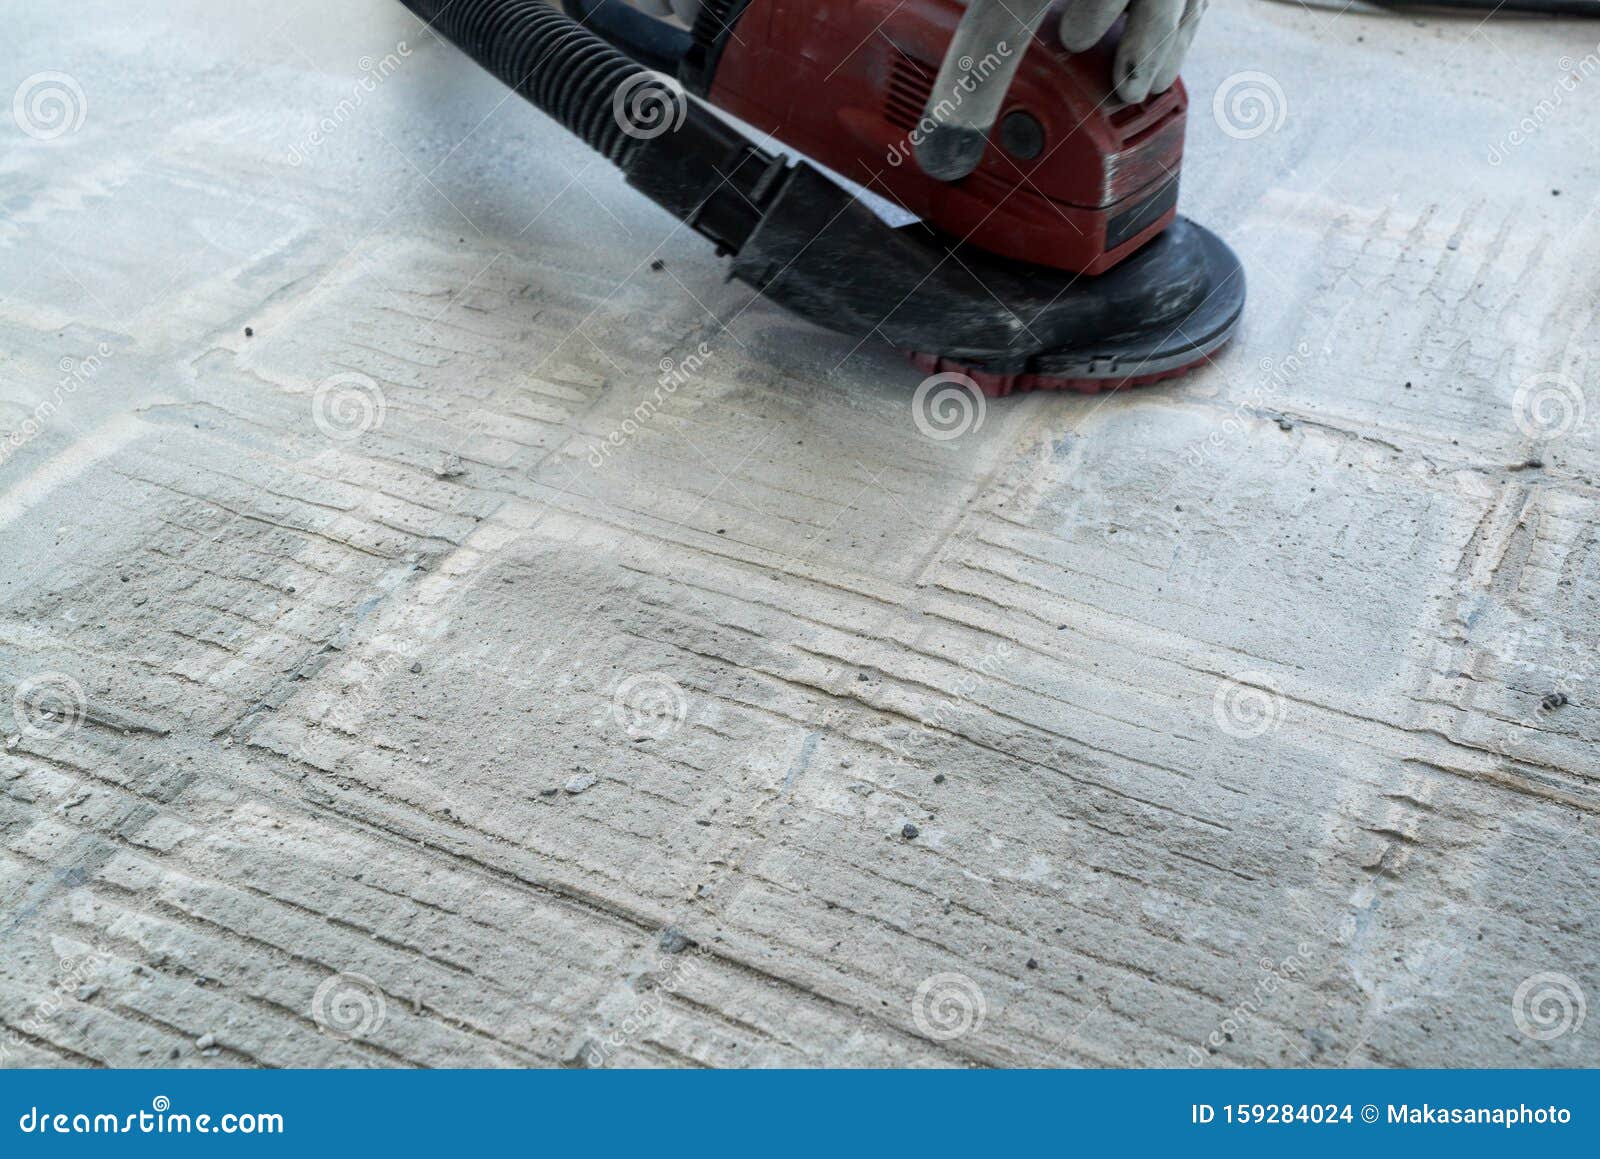 Construction Worker Uses A Concrete Grinder For Removing Tile